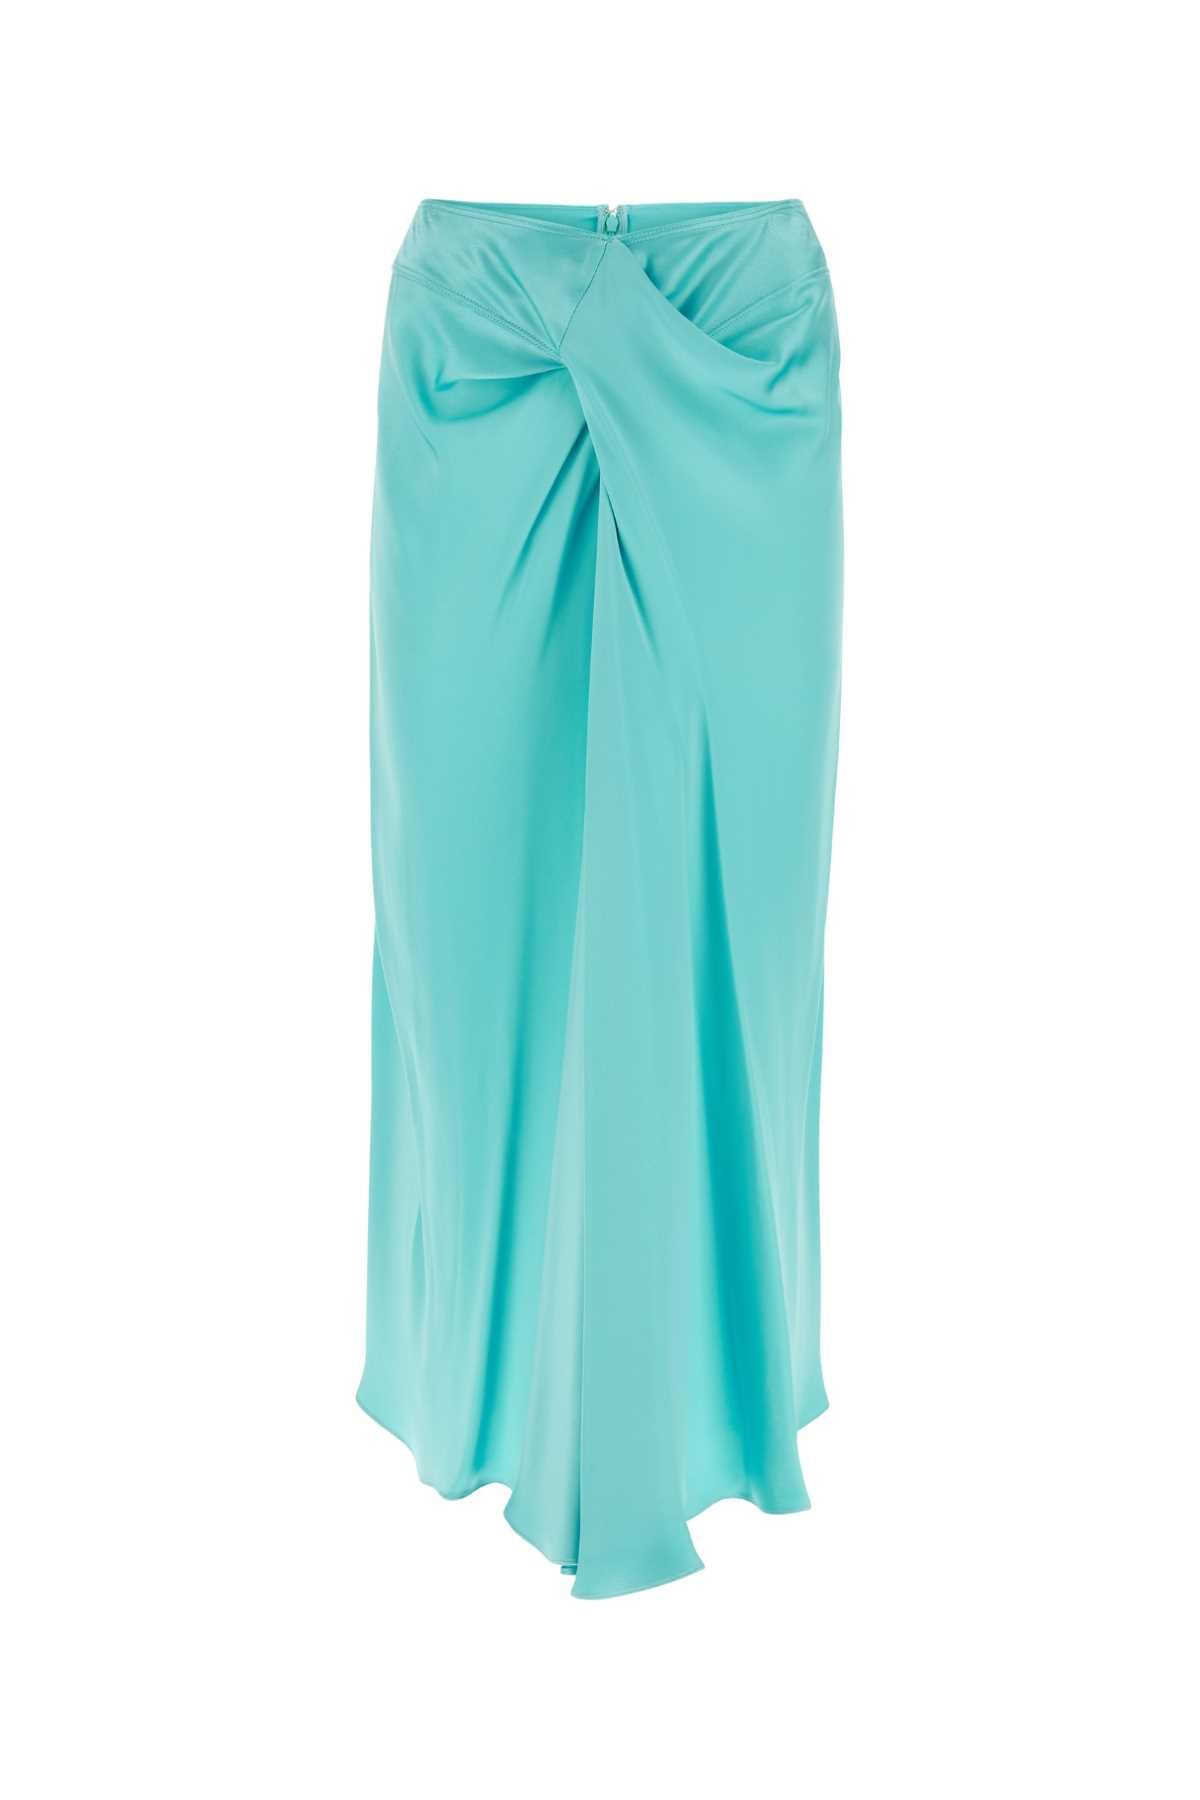 Tiffany Satin Skirt